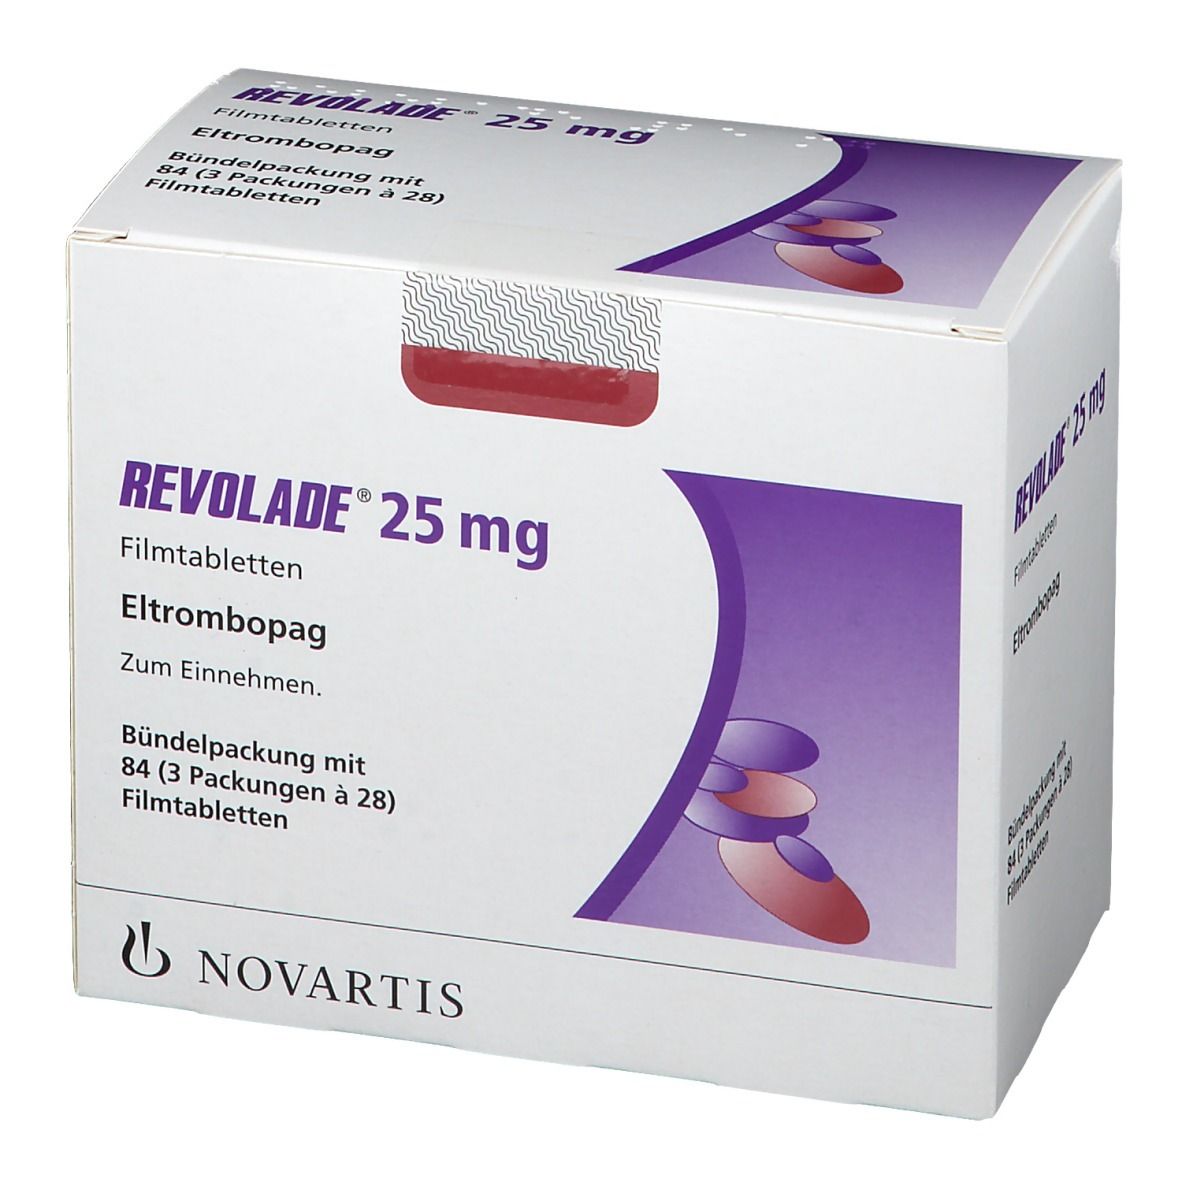 Revolade® 25 mg